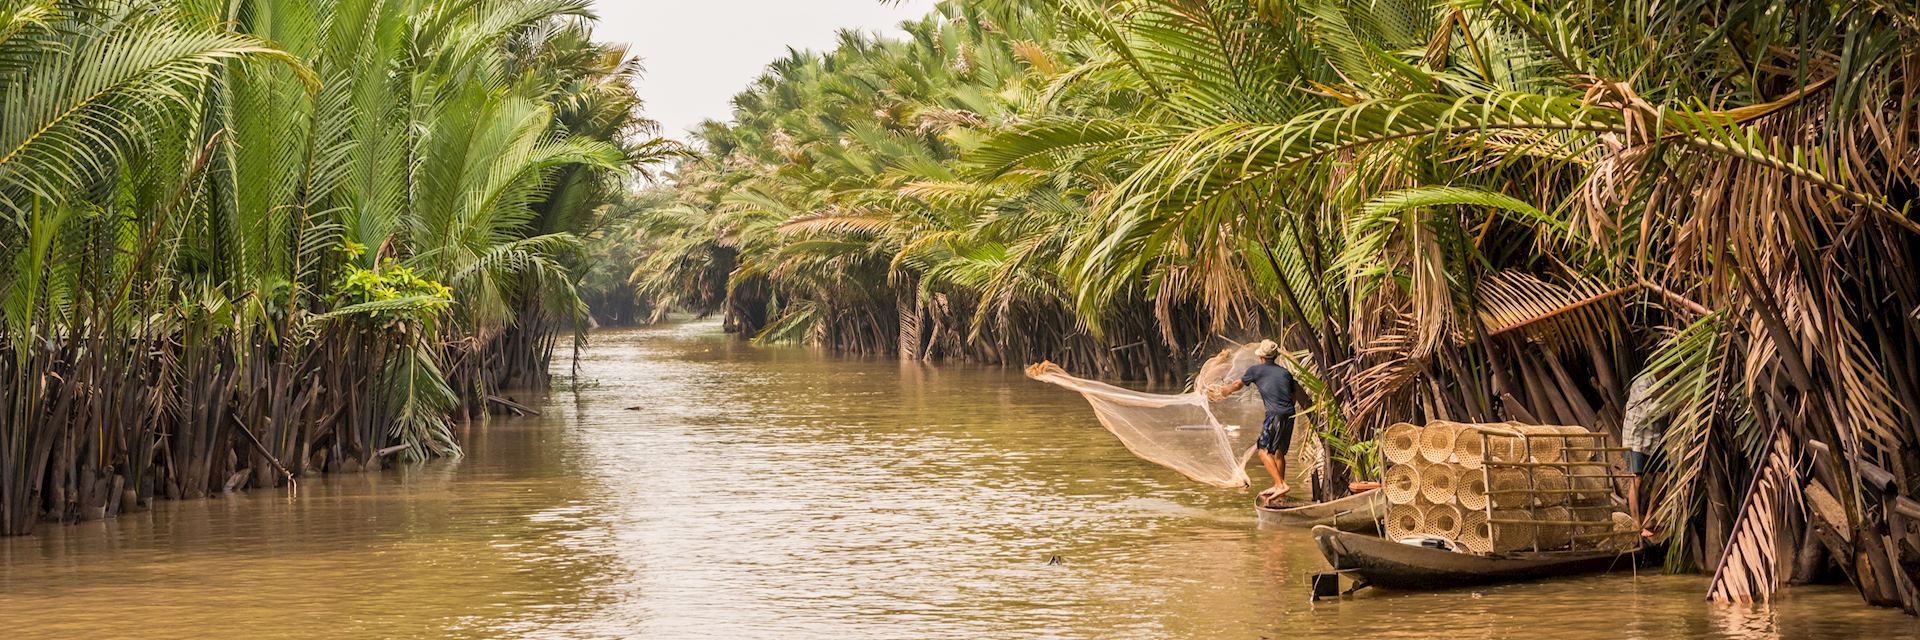 Fishing on the Mekong River, Vietnam